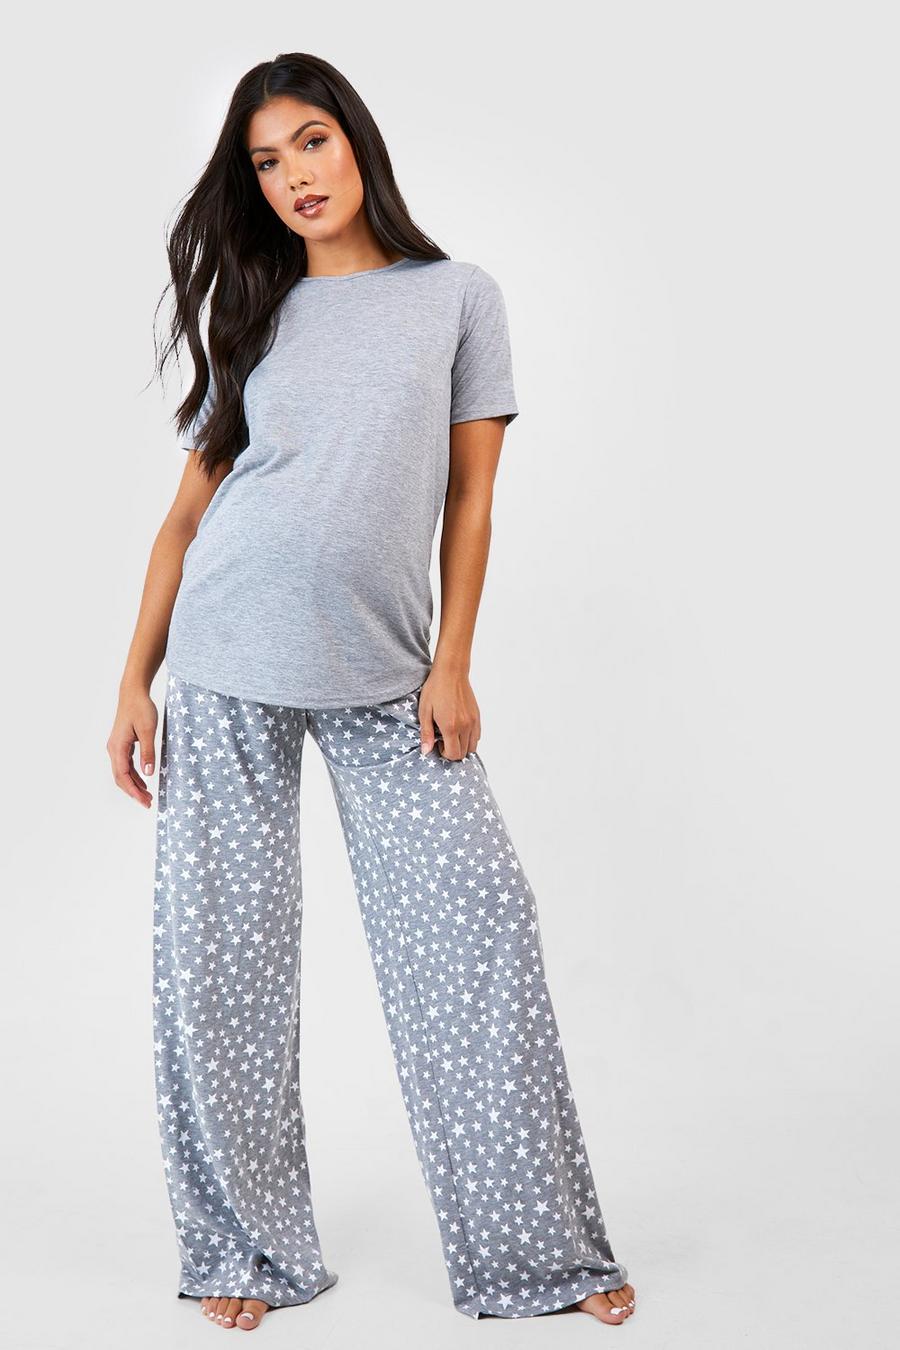 Umstandsmode Pyjama-Set mit Sternen-Print, Grey grau